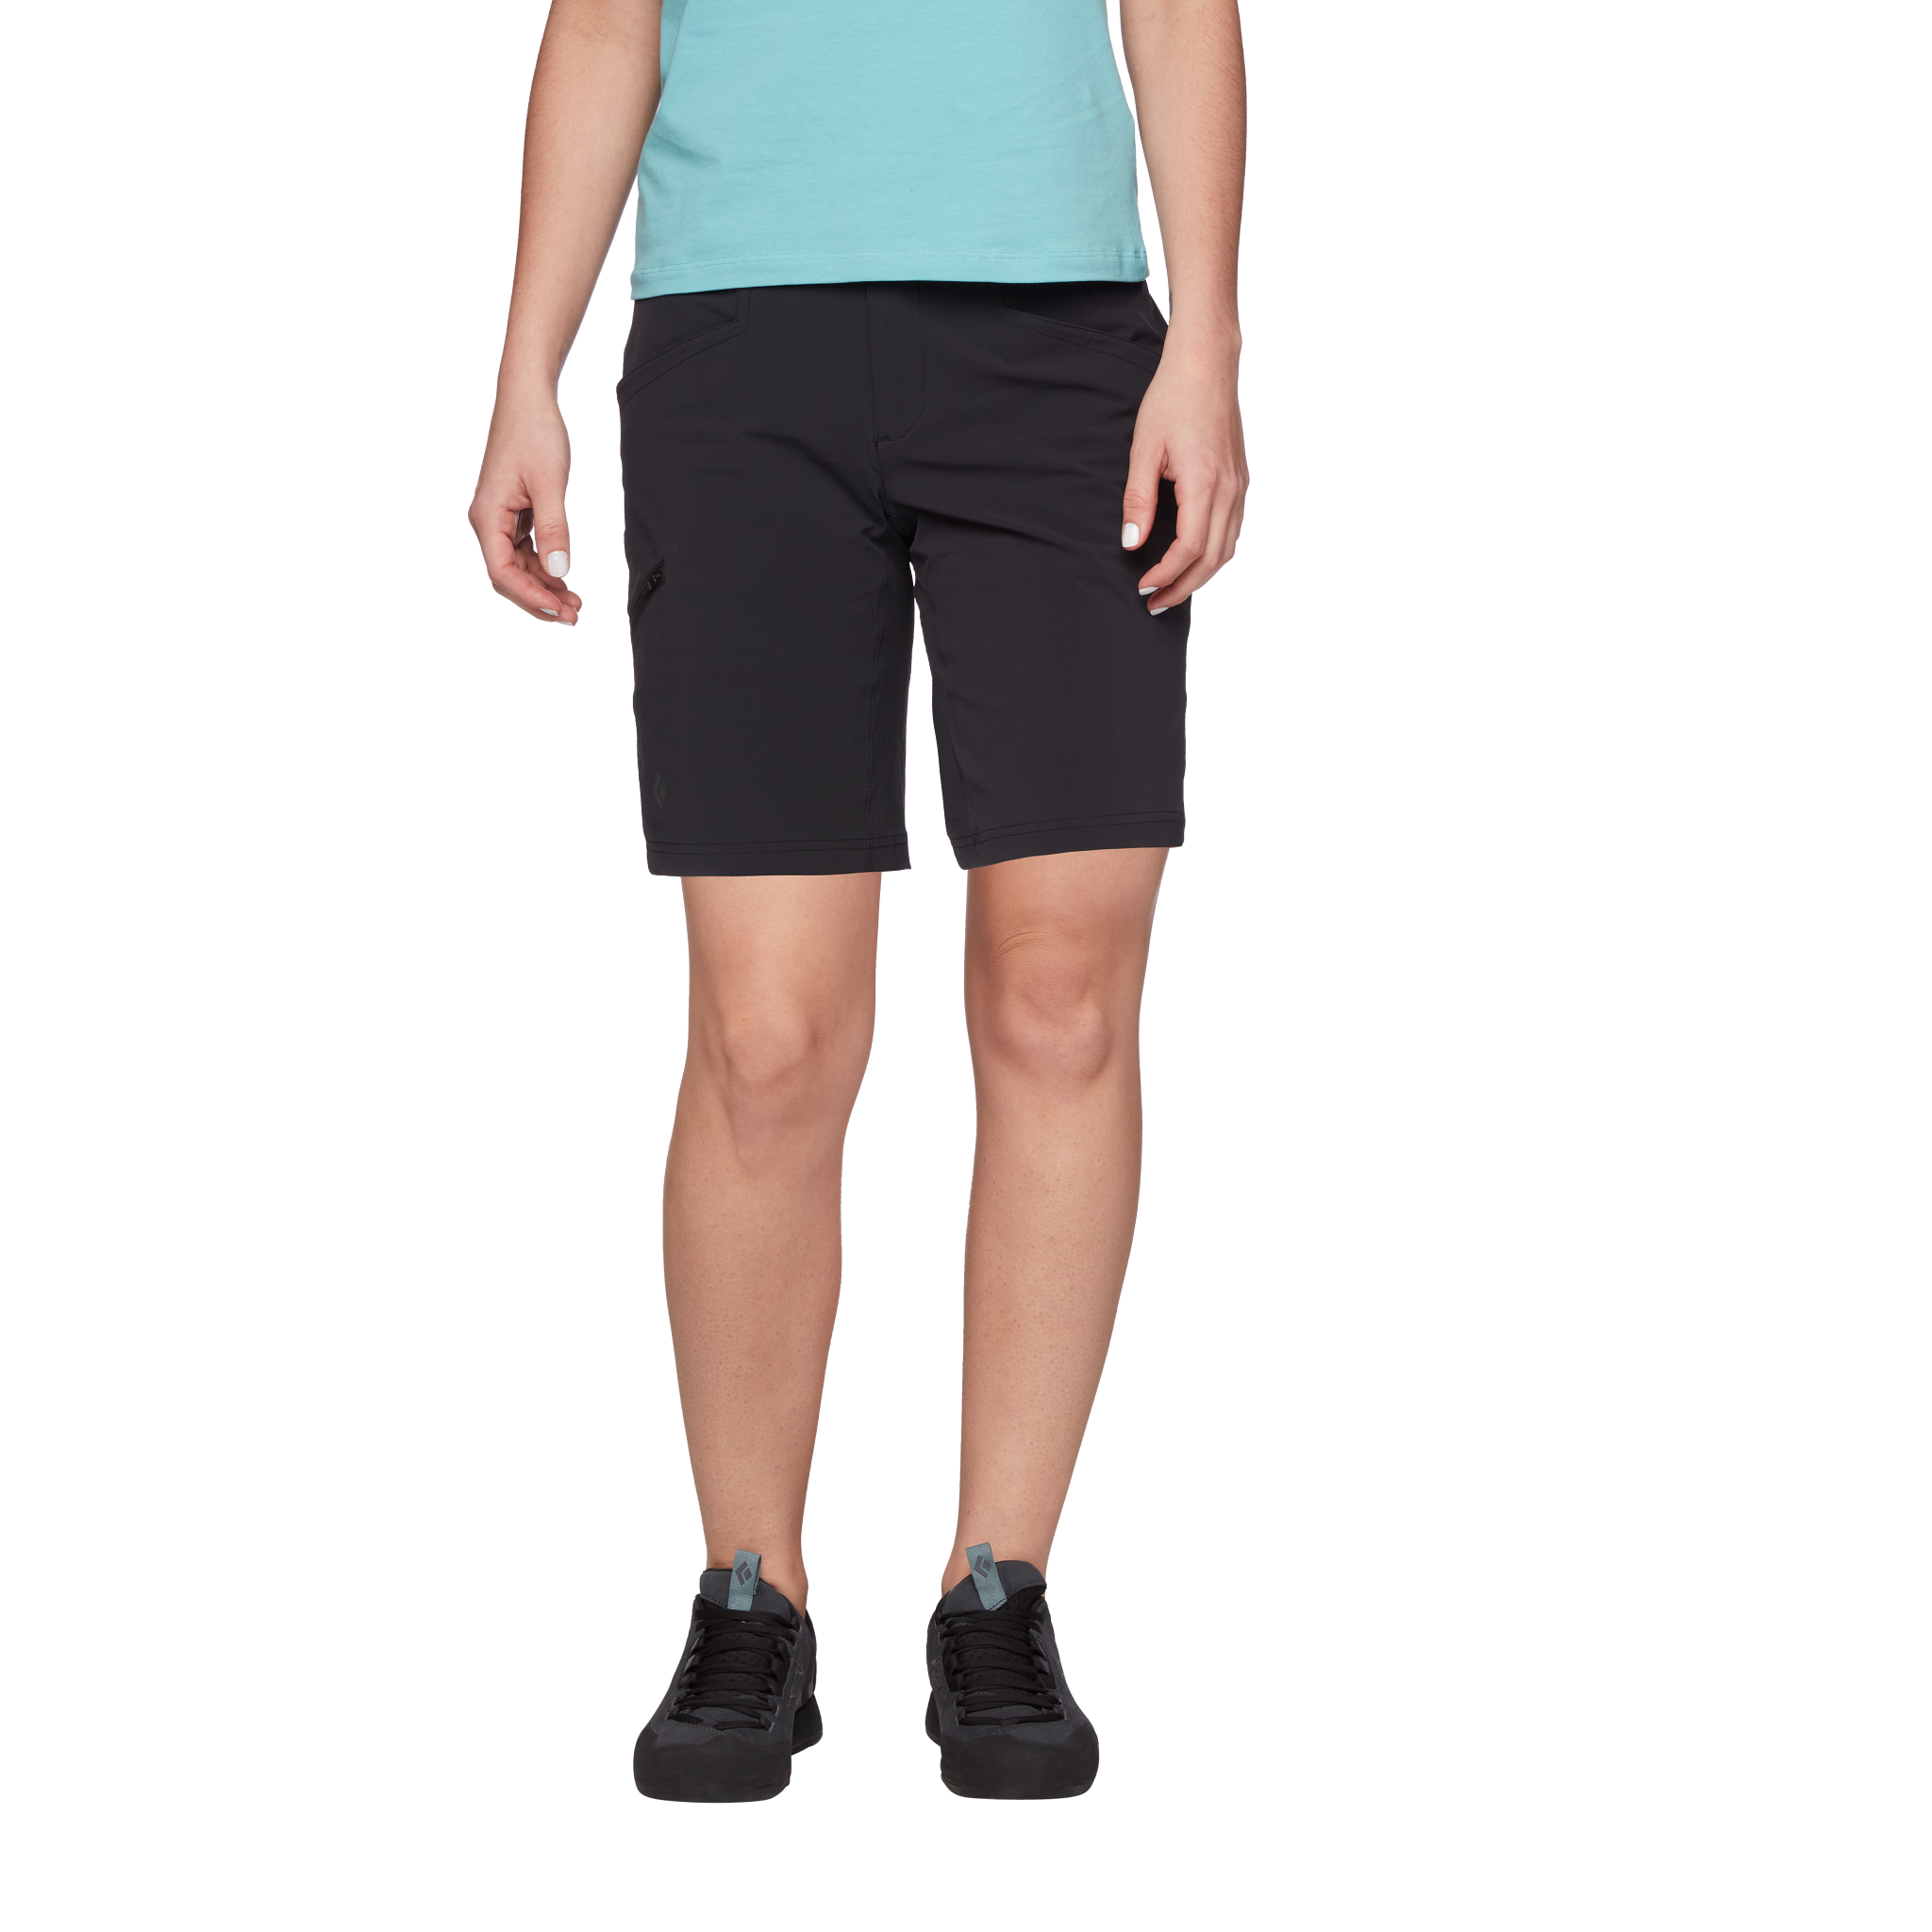 Black Diamond Equipment Women's Valley Shorts Size 6, in Black